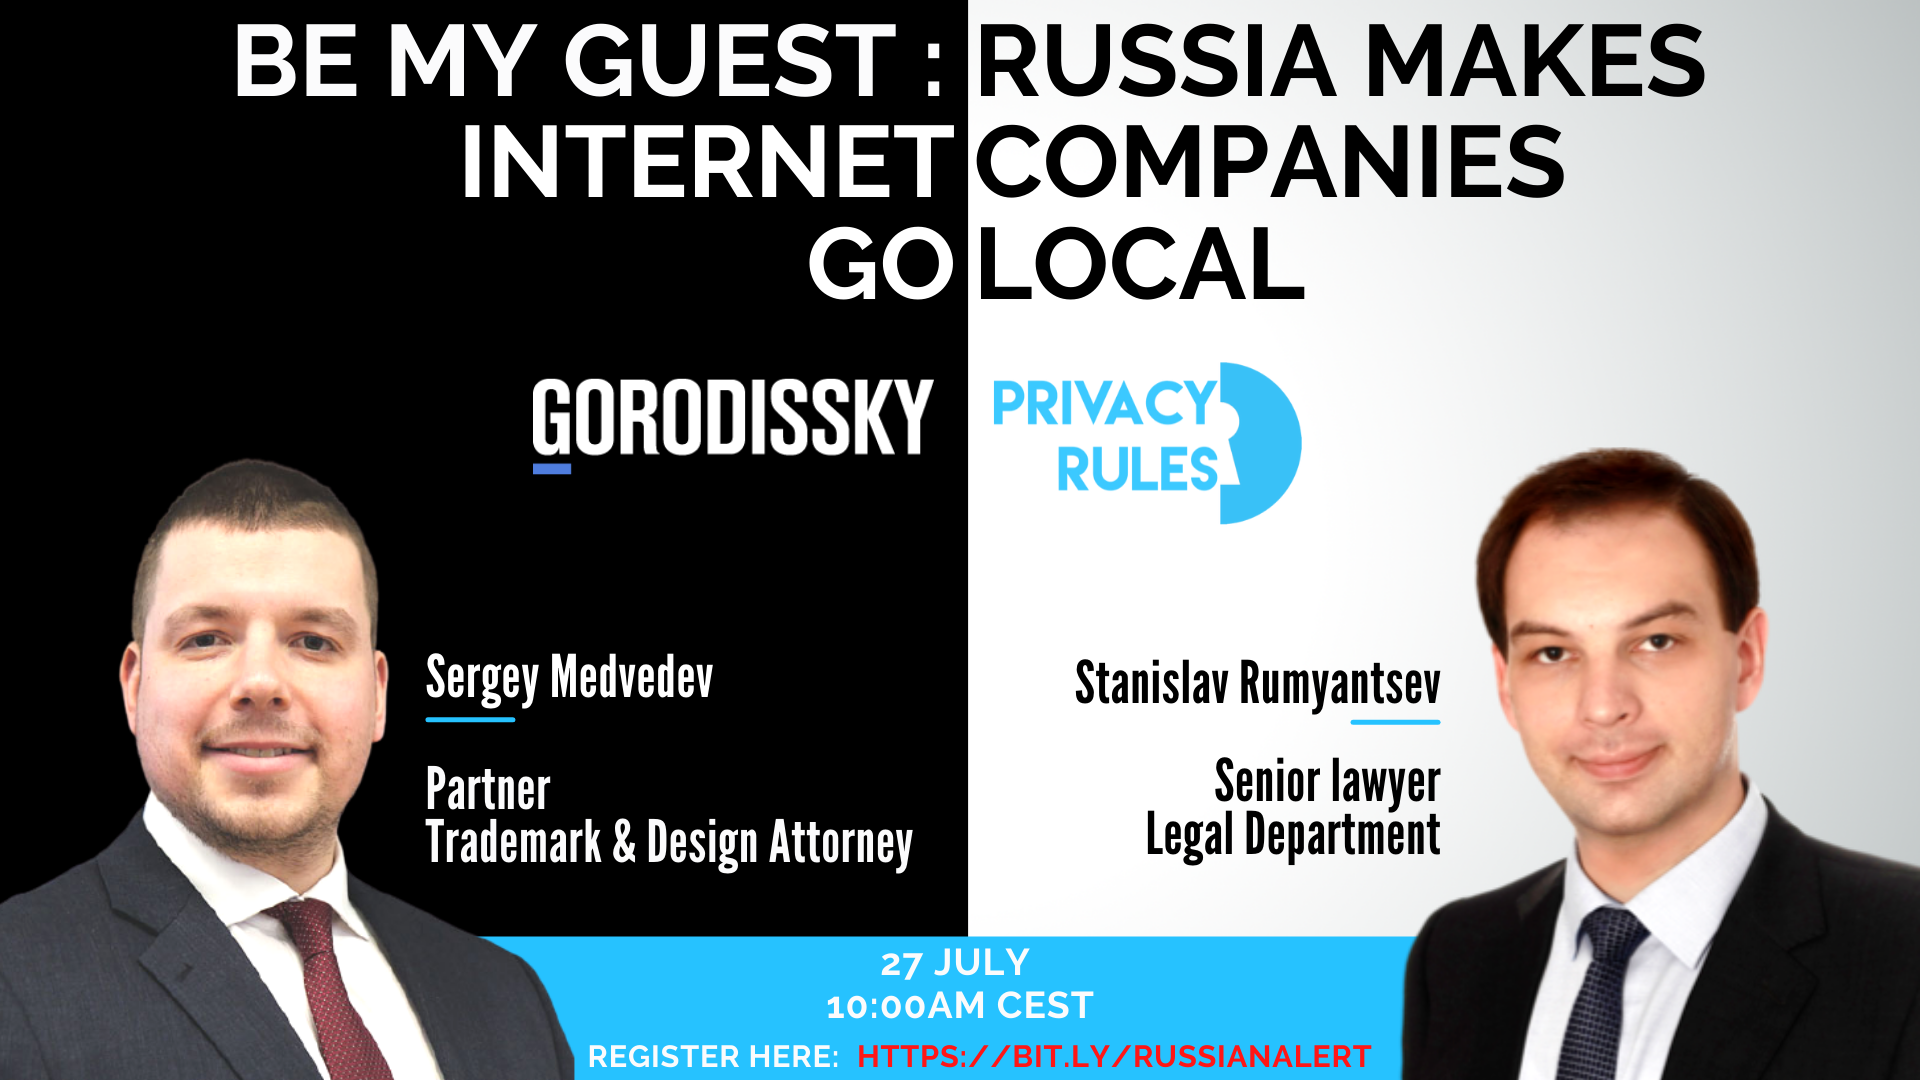 Russia makes internet companies go local